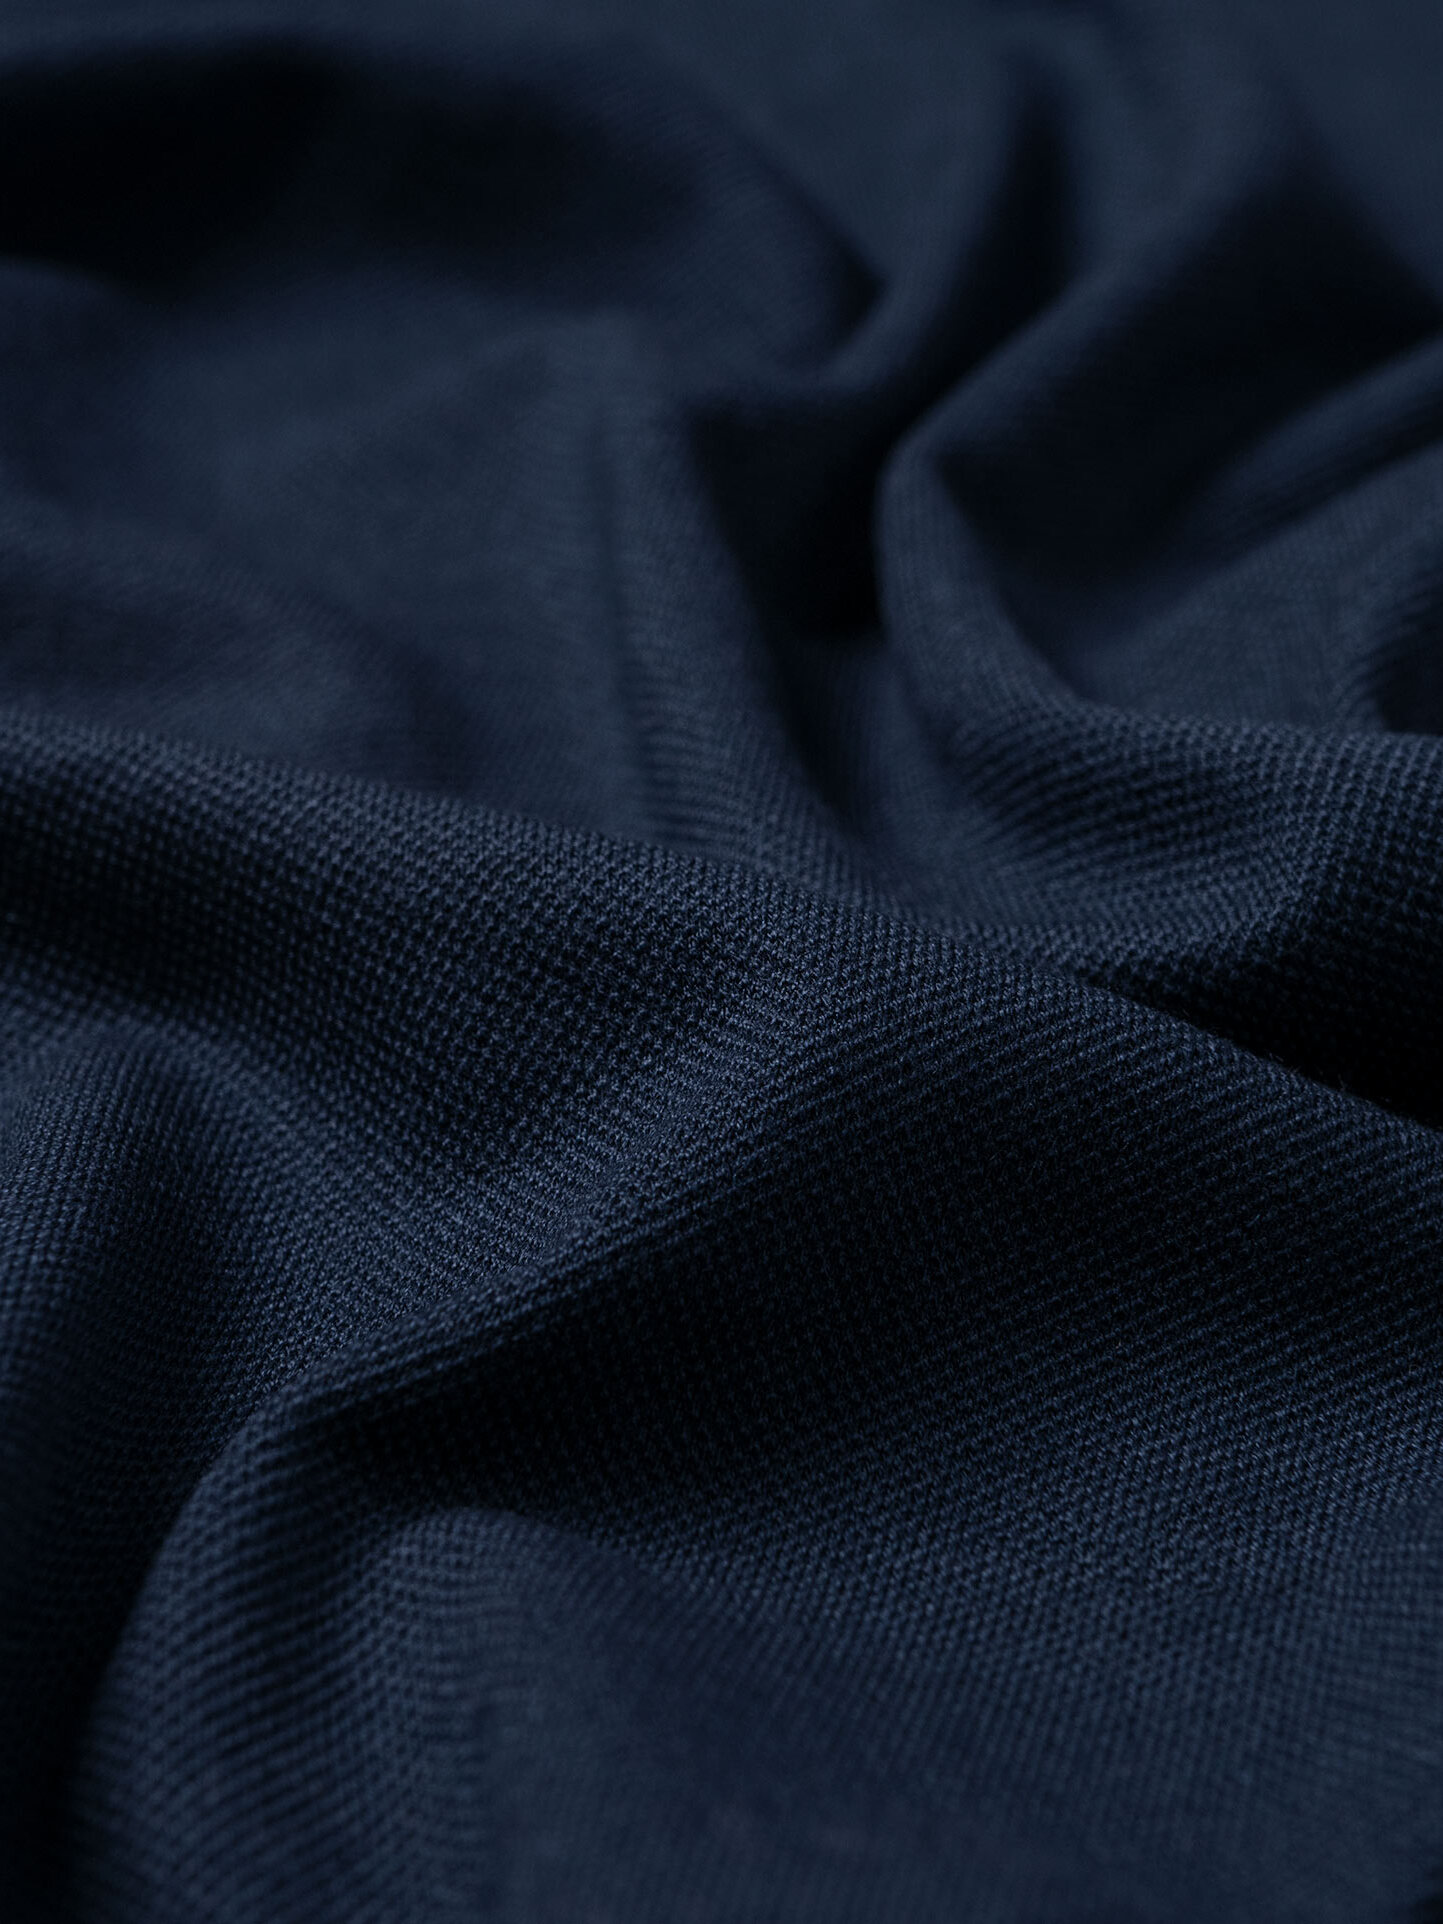 Carmel Navy Organic Cotton and Refibra Pique Shirts by Proper Cloth